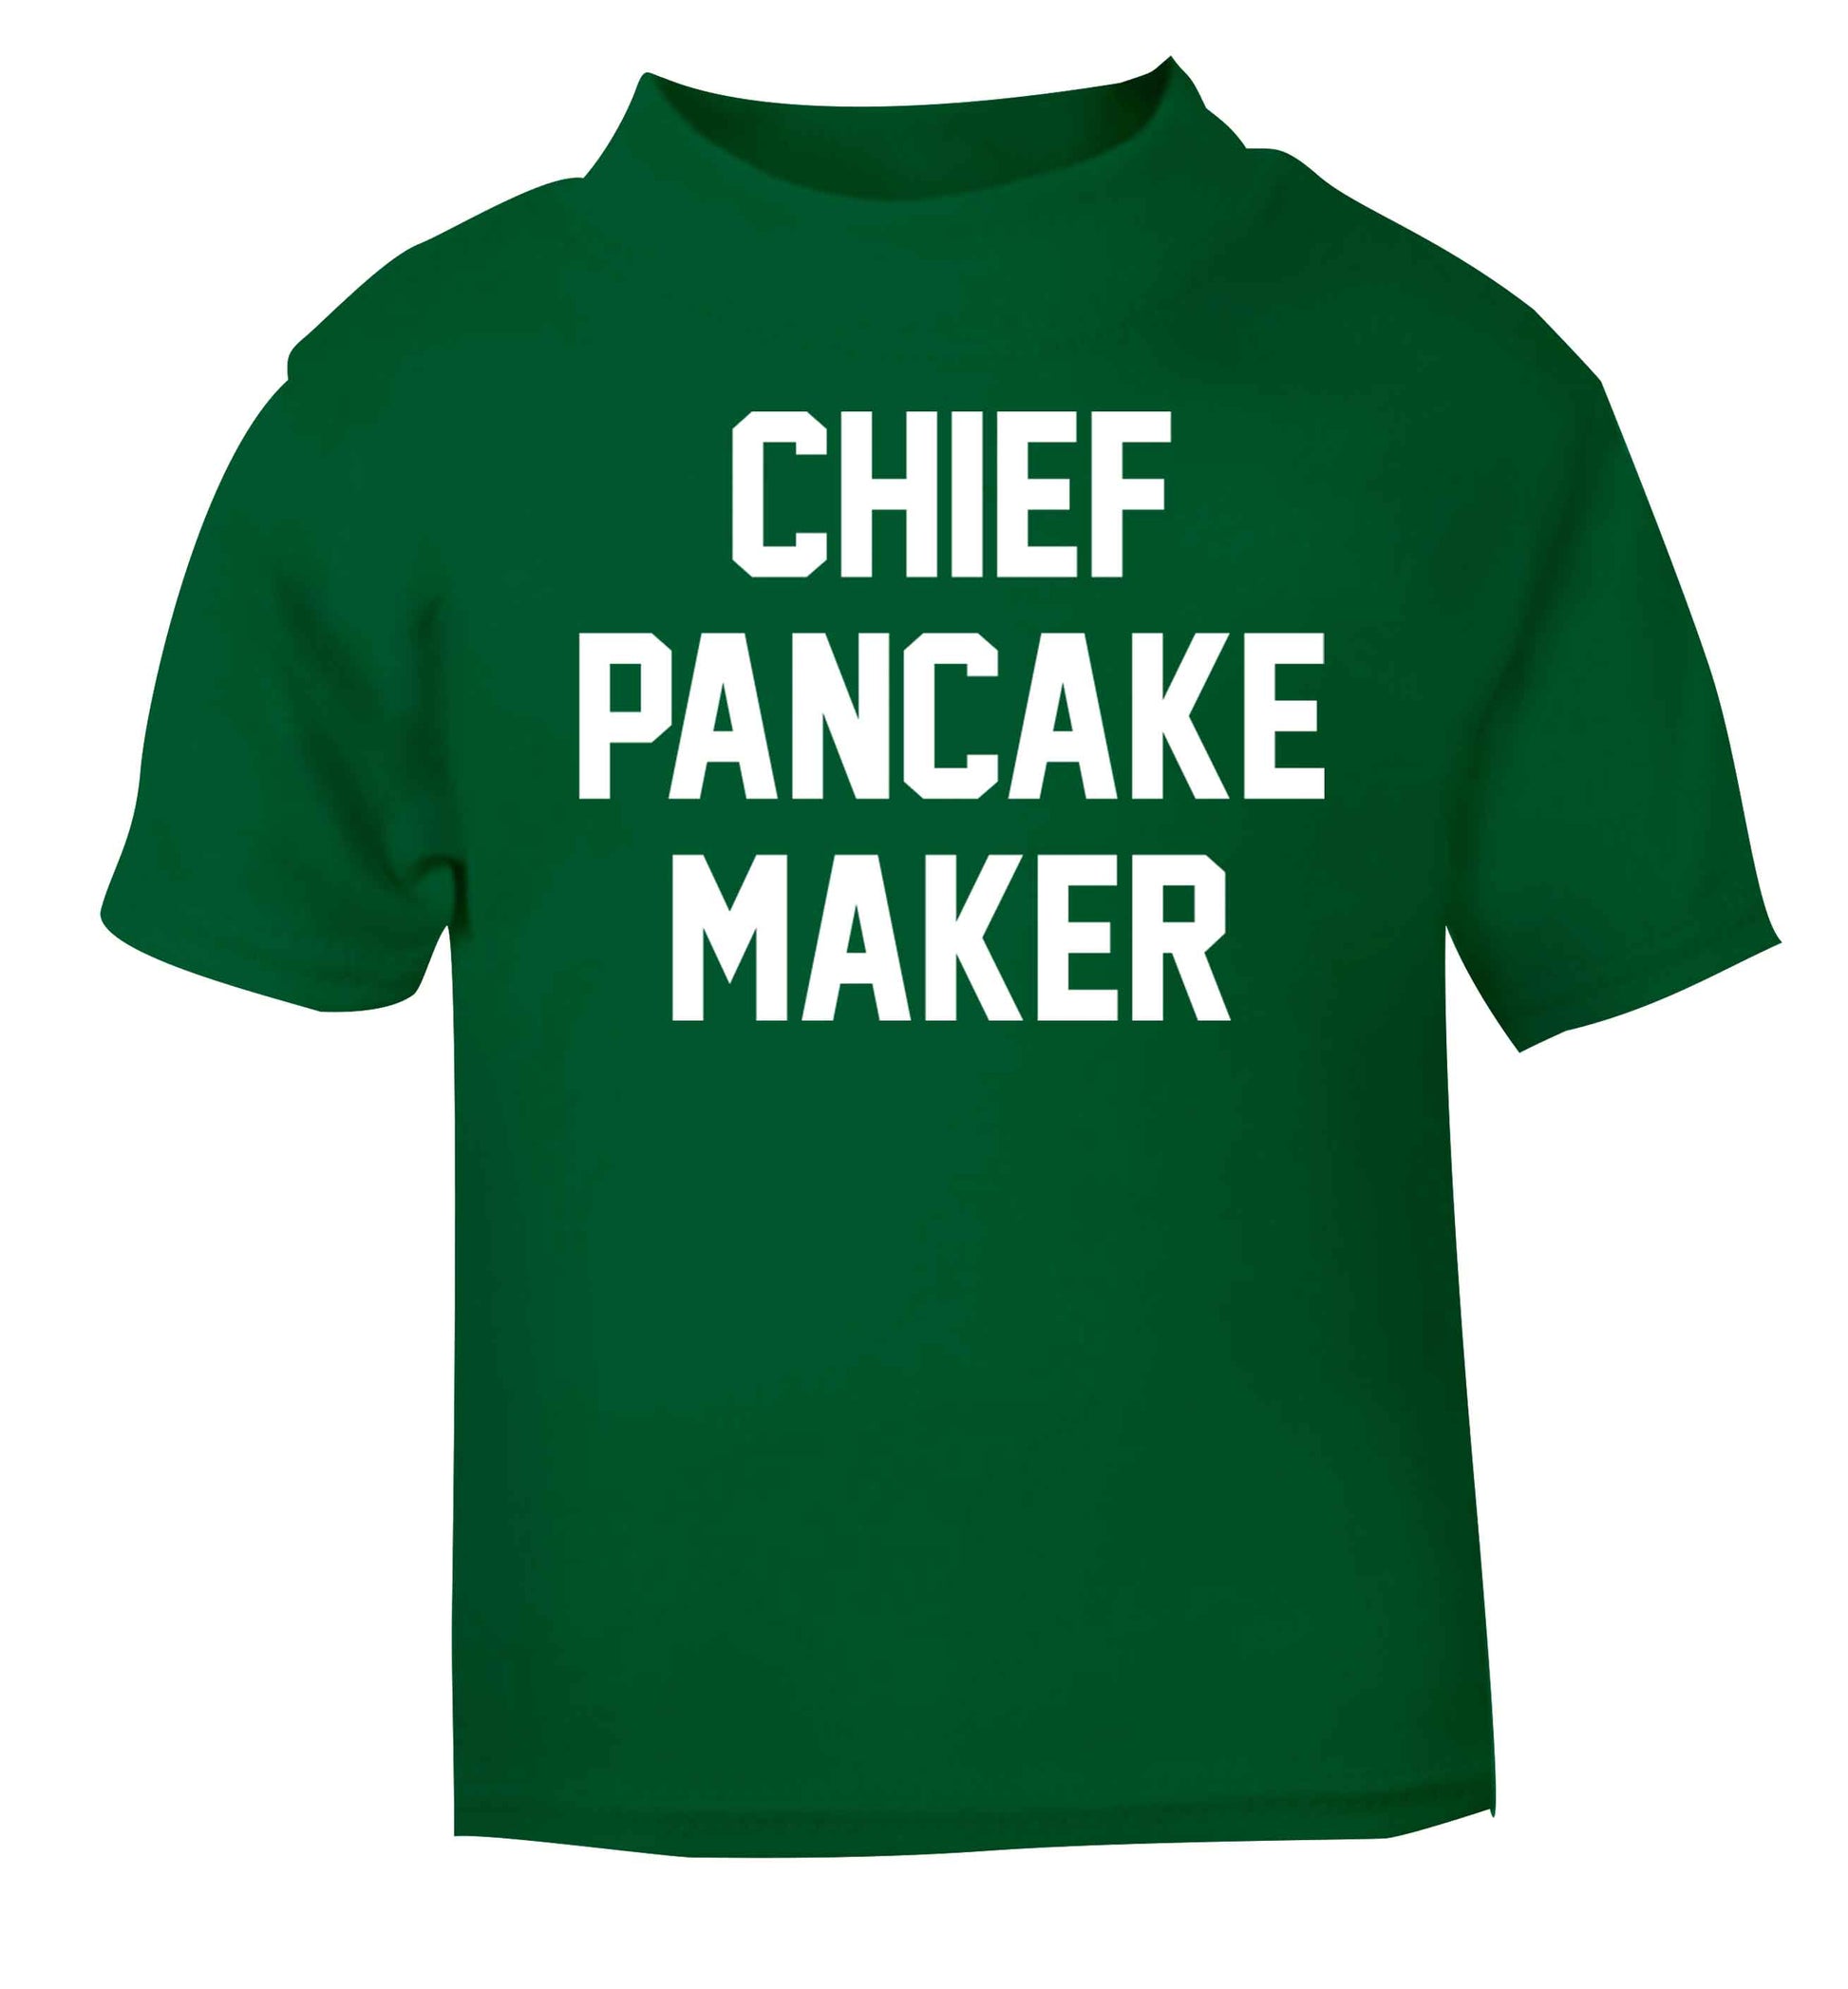 Chief pancake maker green baby toddler Tshirt 2 Years